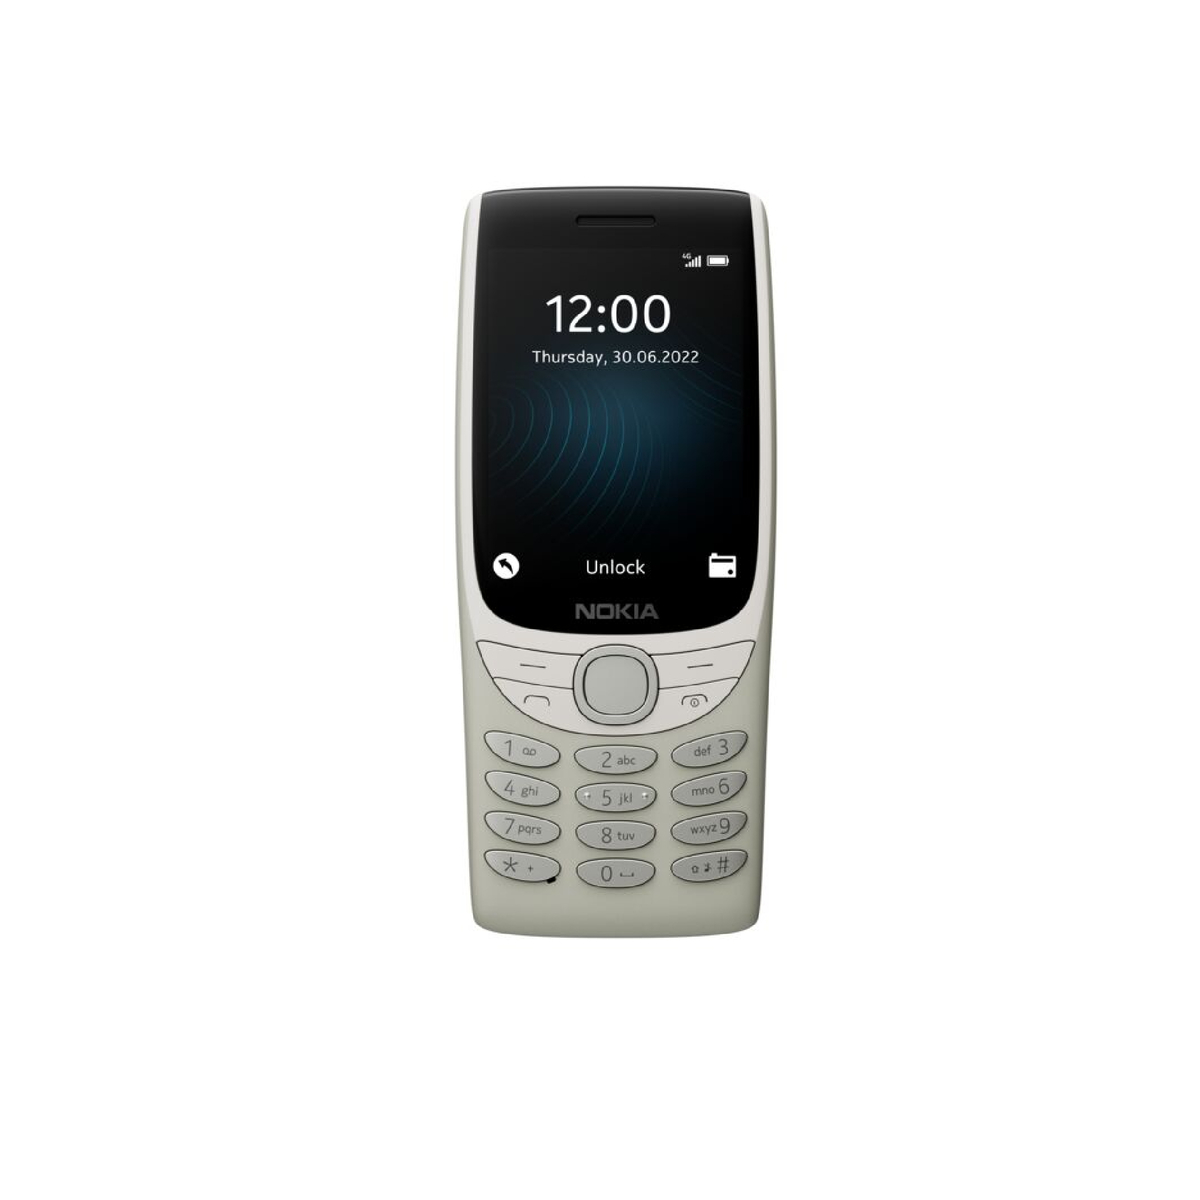 Nokia 8210 Dual SIM 4G Feature Phone, 48 MB RAM, 128 MB Storage, Sand